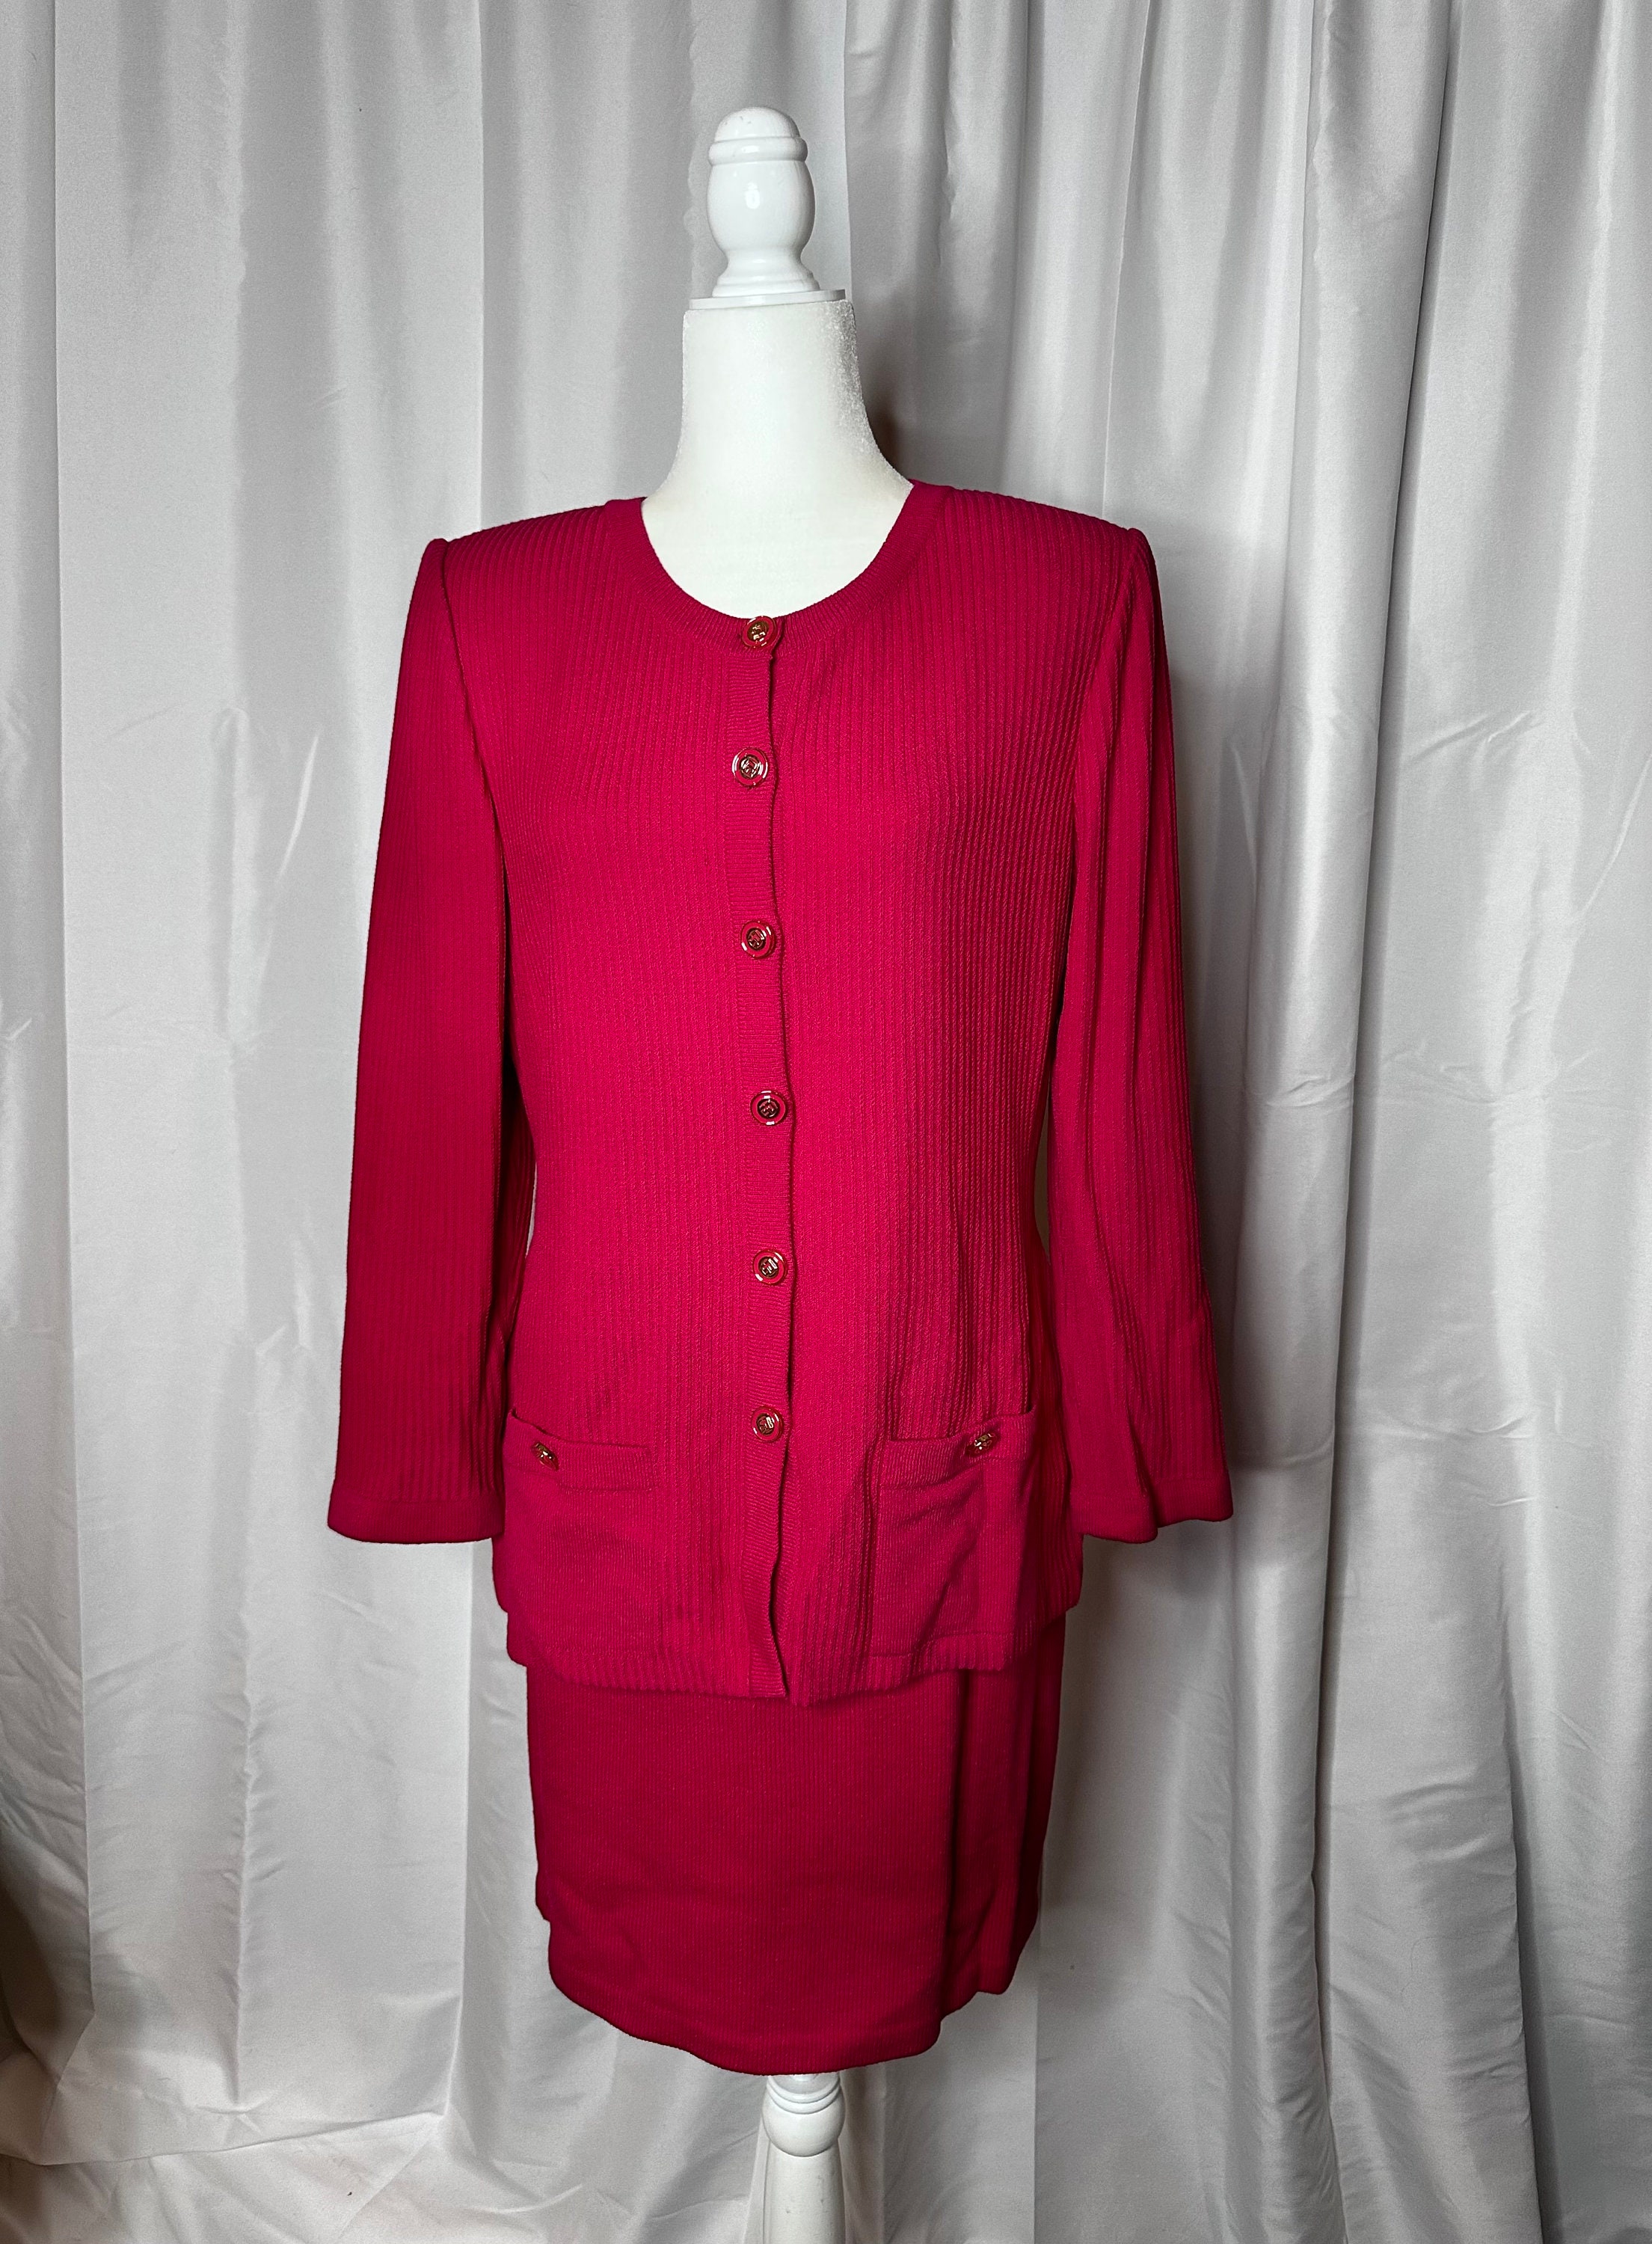 ST JOHN COLLECTION Skirt Suit SIZE 6 Raspberry Pink Navy Blue Trim Santana  Knits